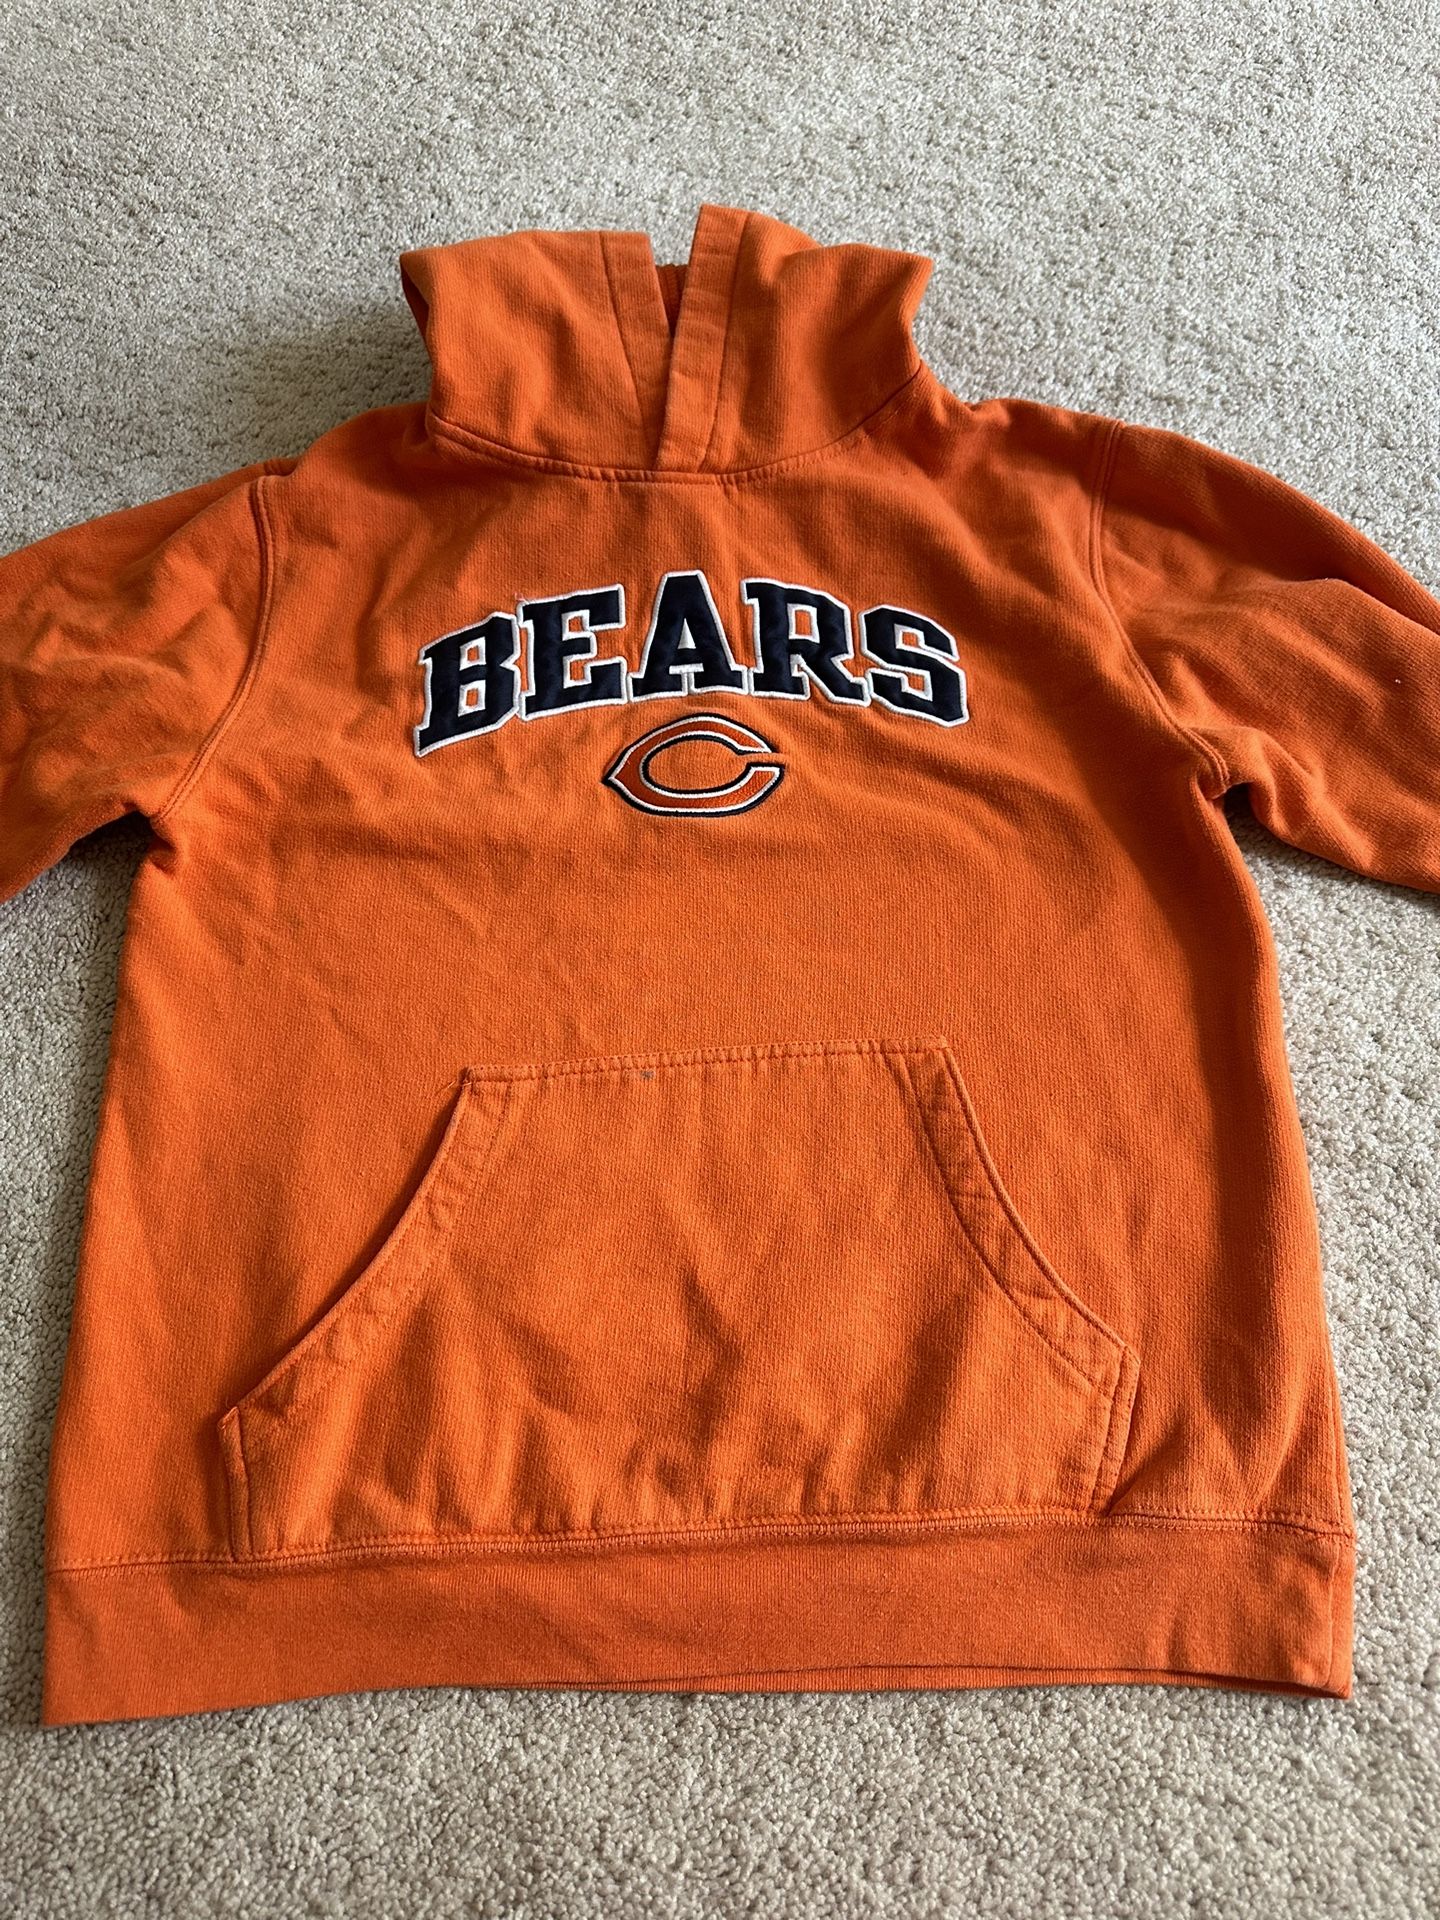 Sz 10-12 Boys Chicago Bears Sweatshirt 